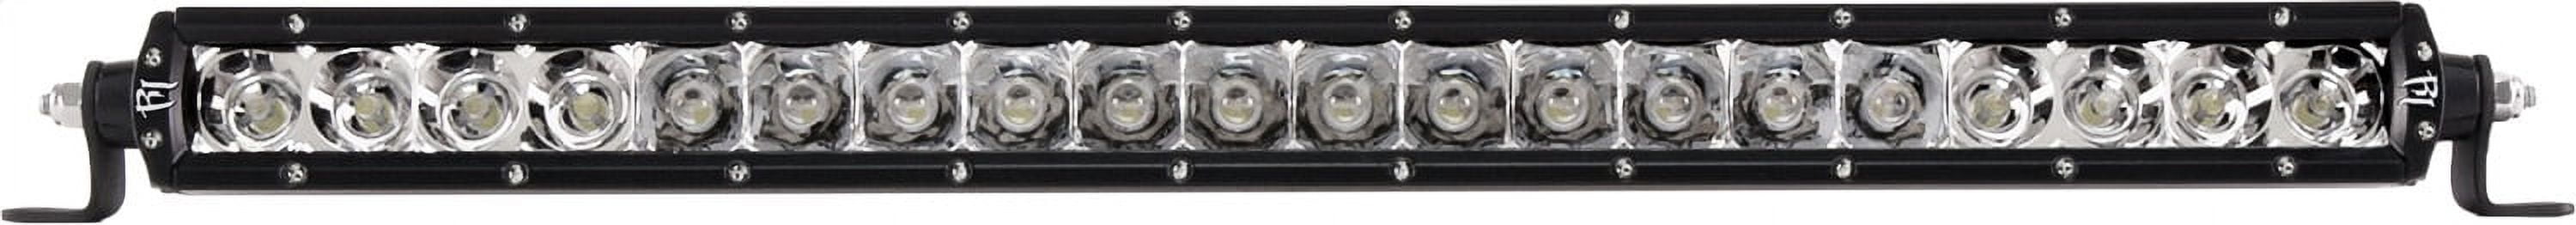 Rigid Industries 20in E-Mark SR-Series Spot/Flood LED Light Bar